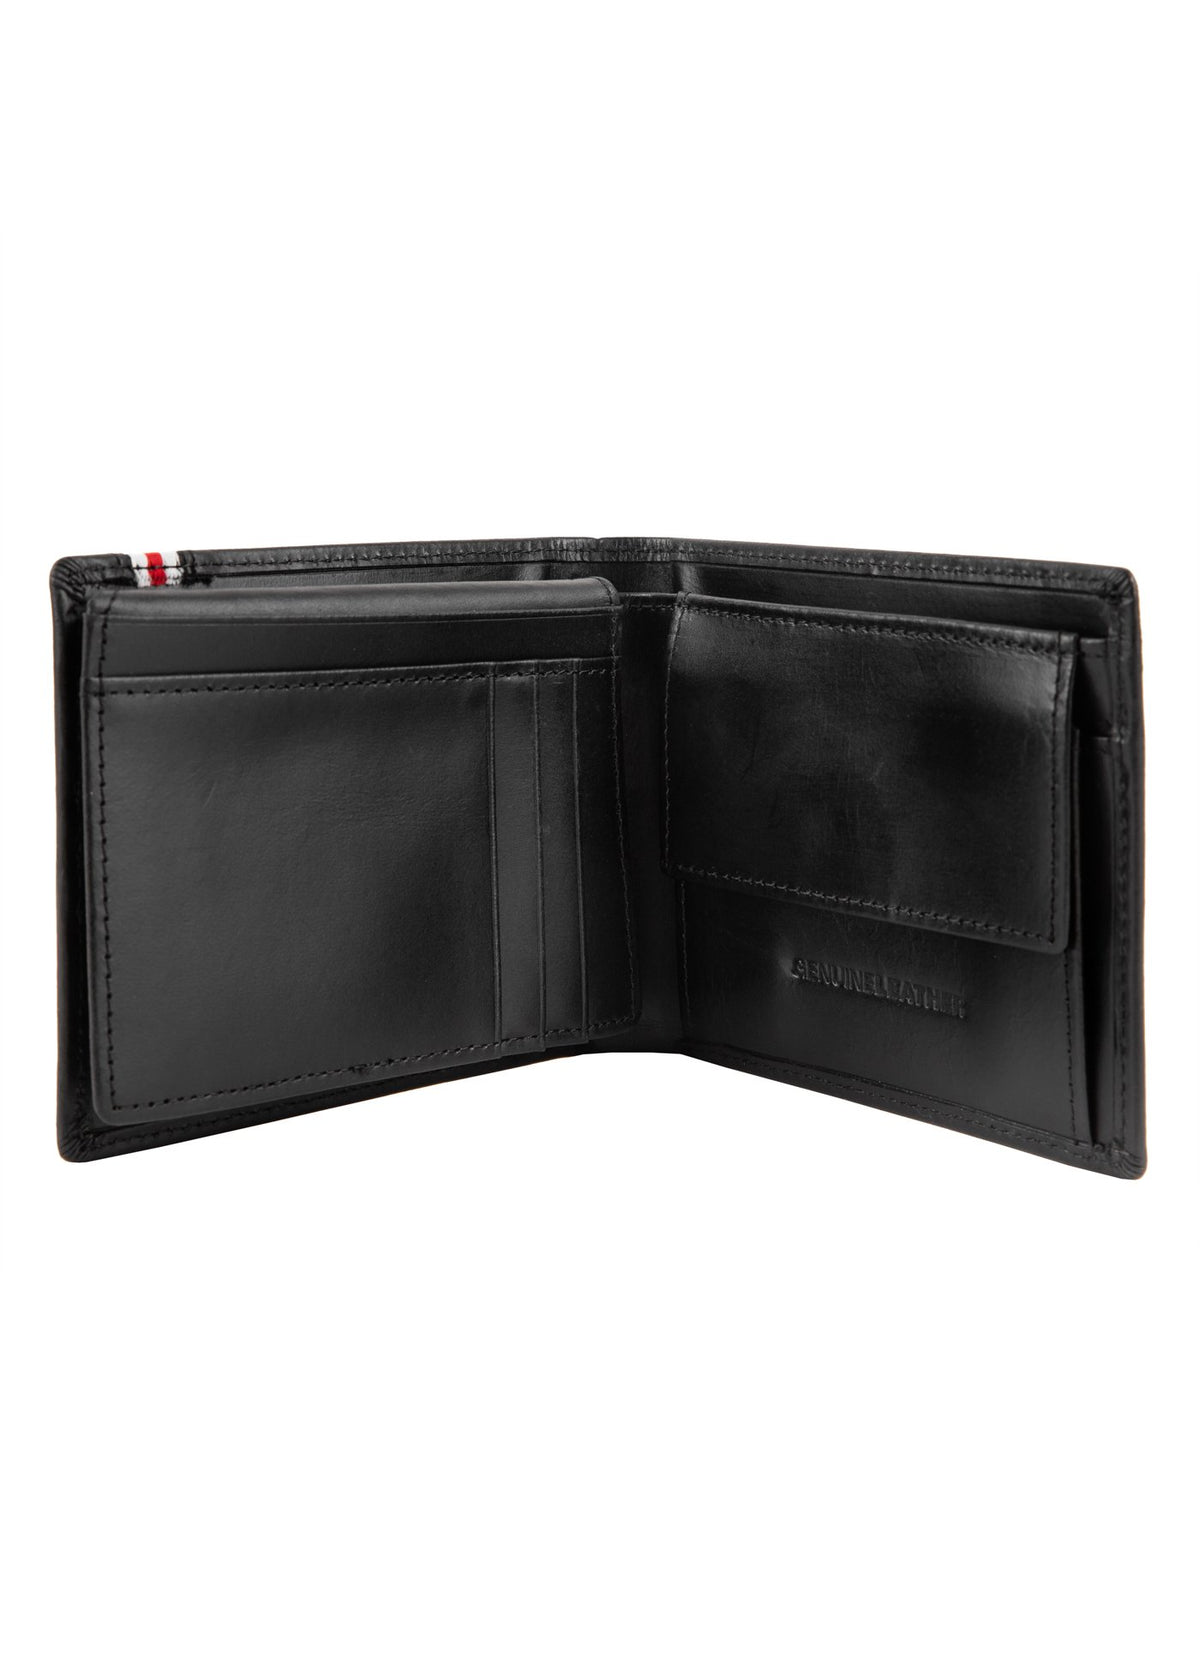 LIN WOOD Black Leather Wallet.